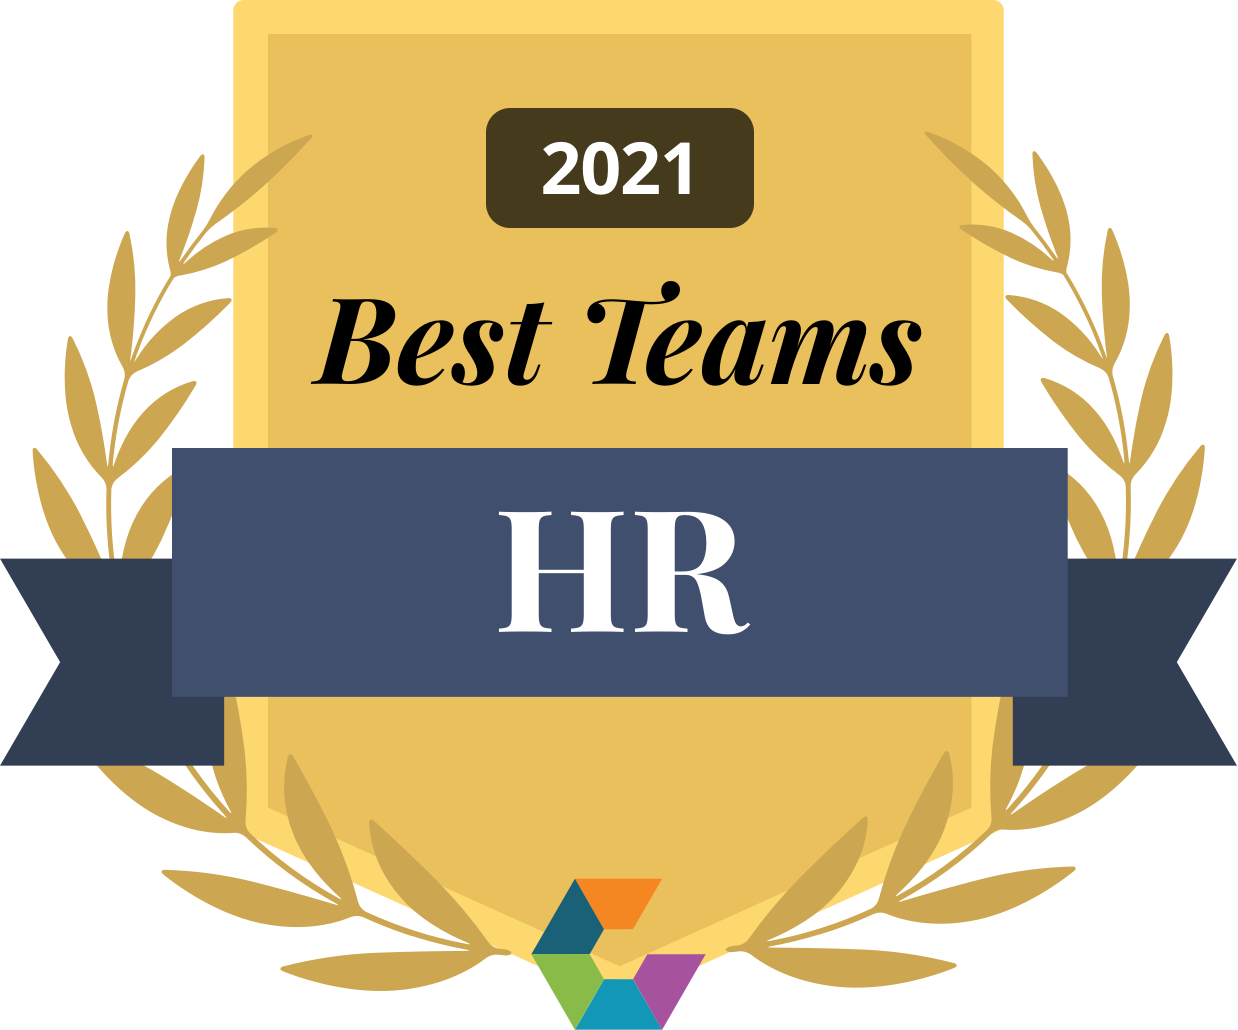 Comparably Award | Best HR Teams of 2021 | Smartsheet